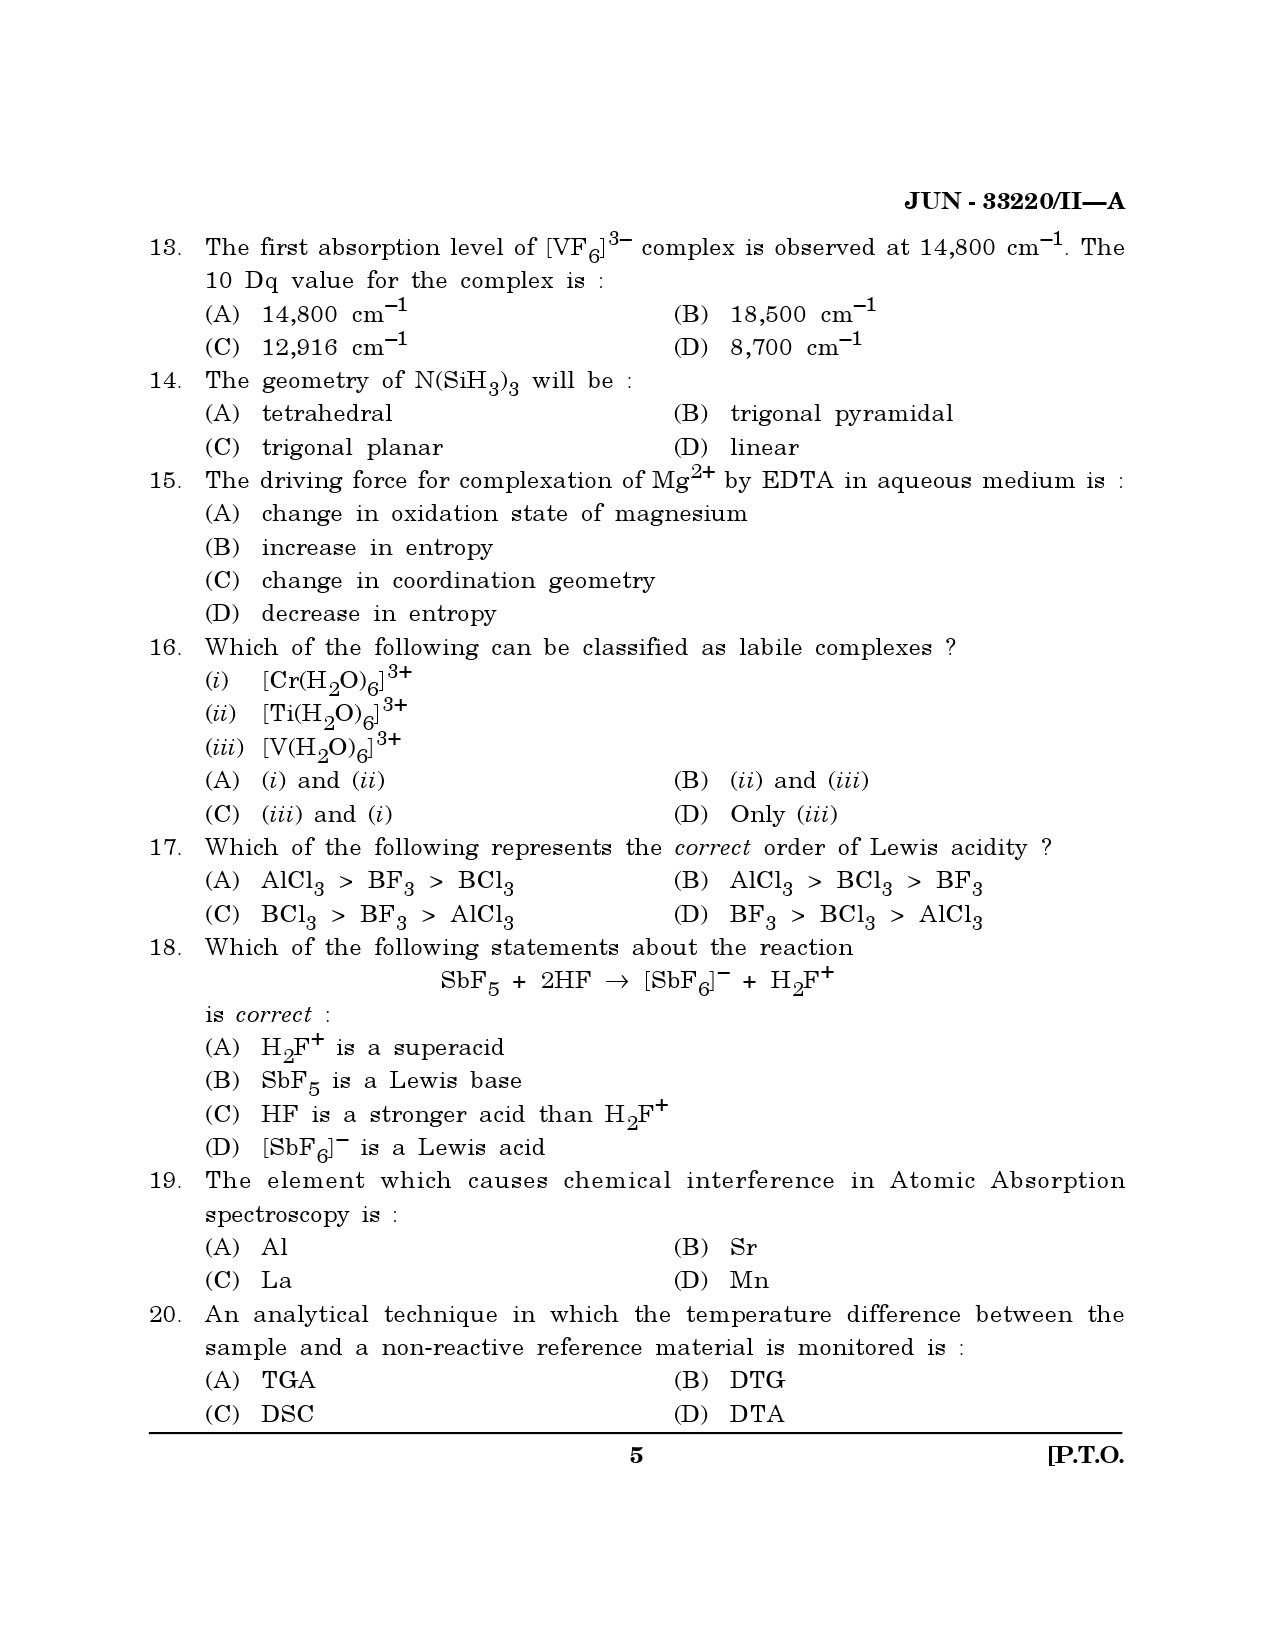 Maharashtra SET Chemical Sciences Question Paper II June 2020 4